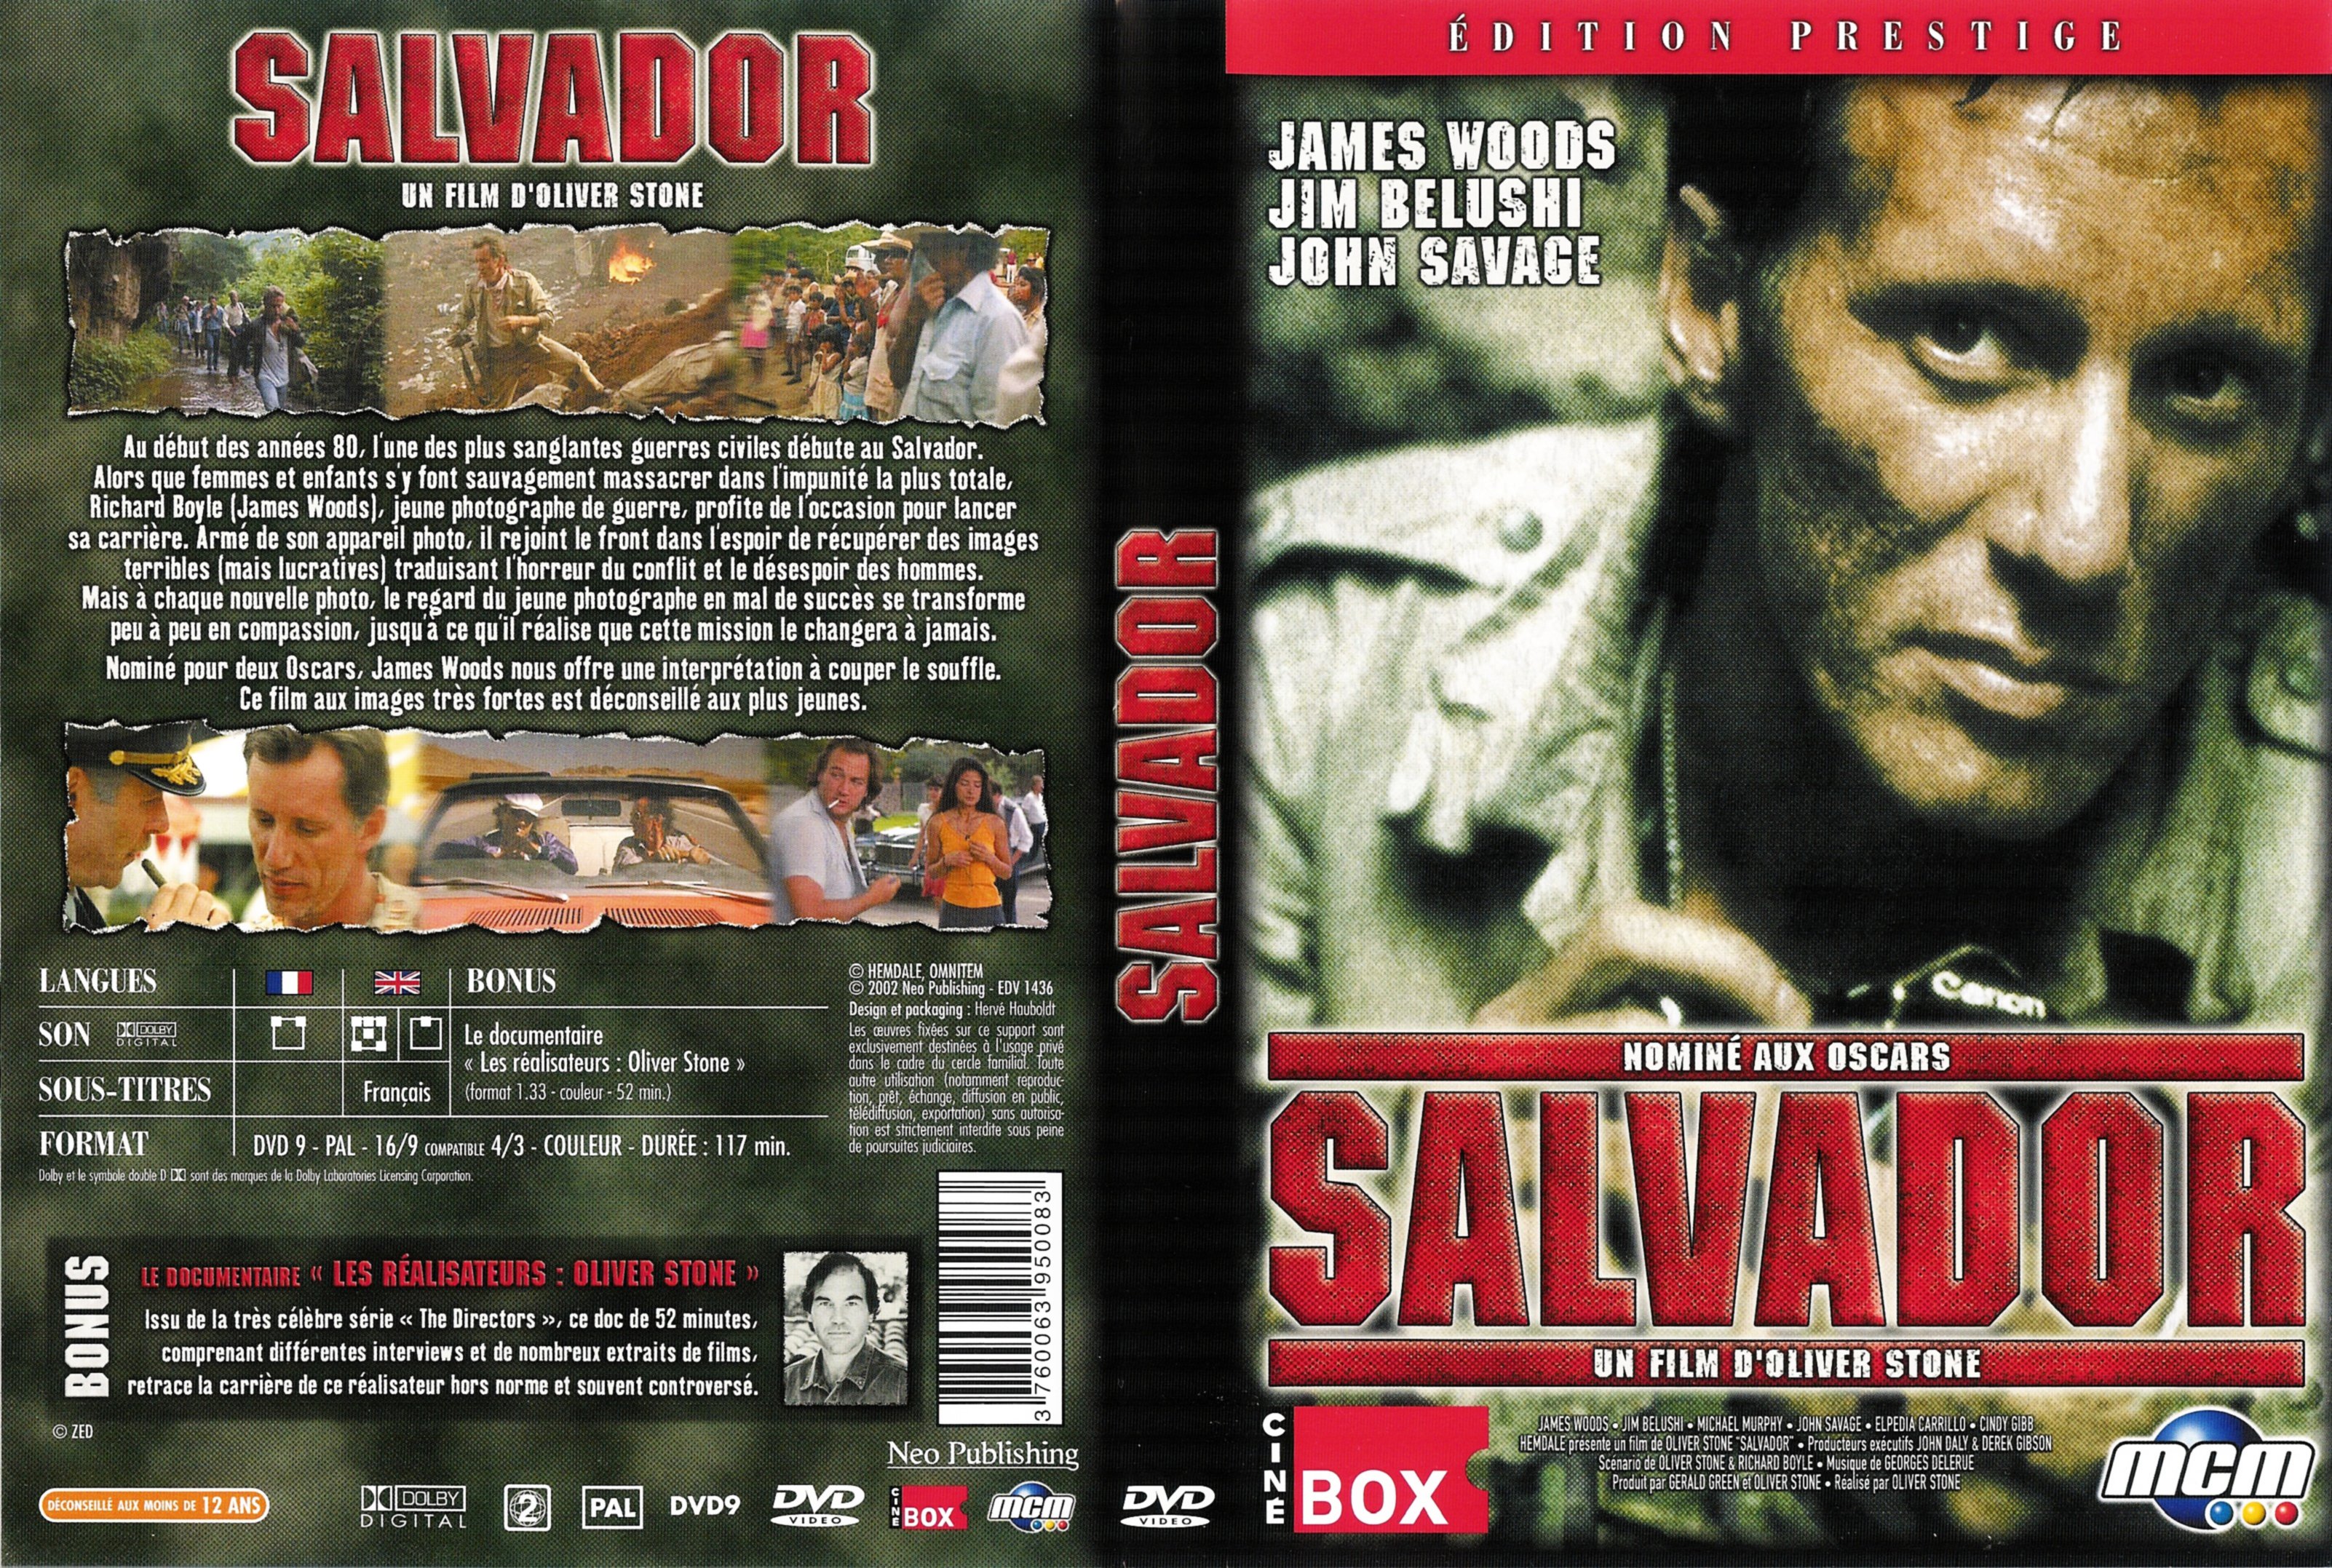 Jaquette DVD Salvador